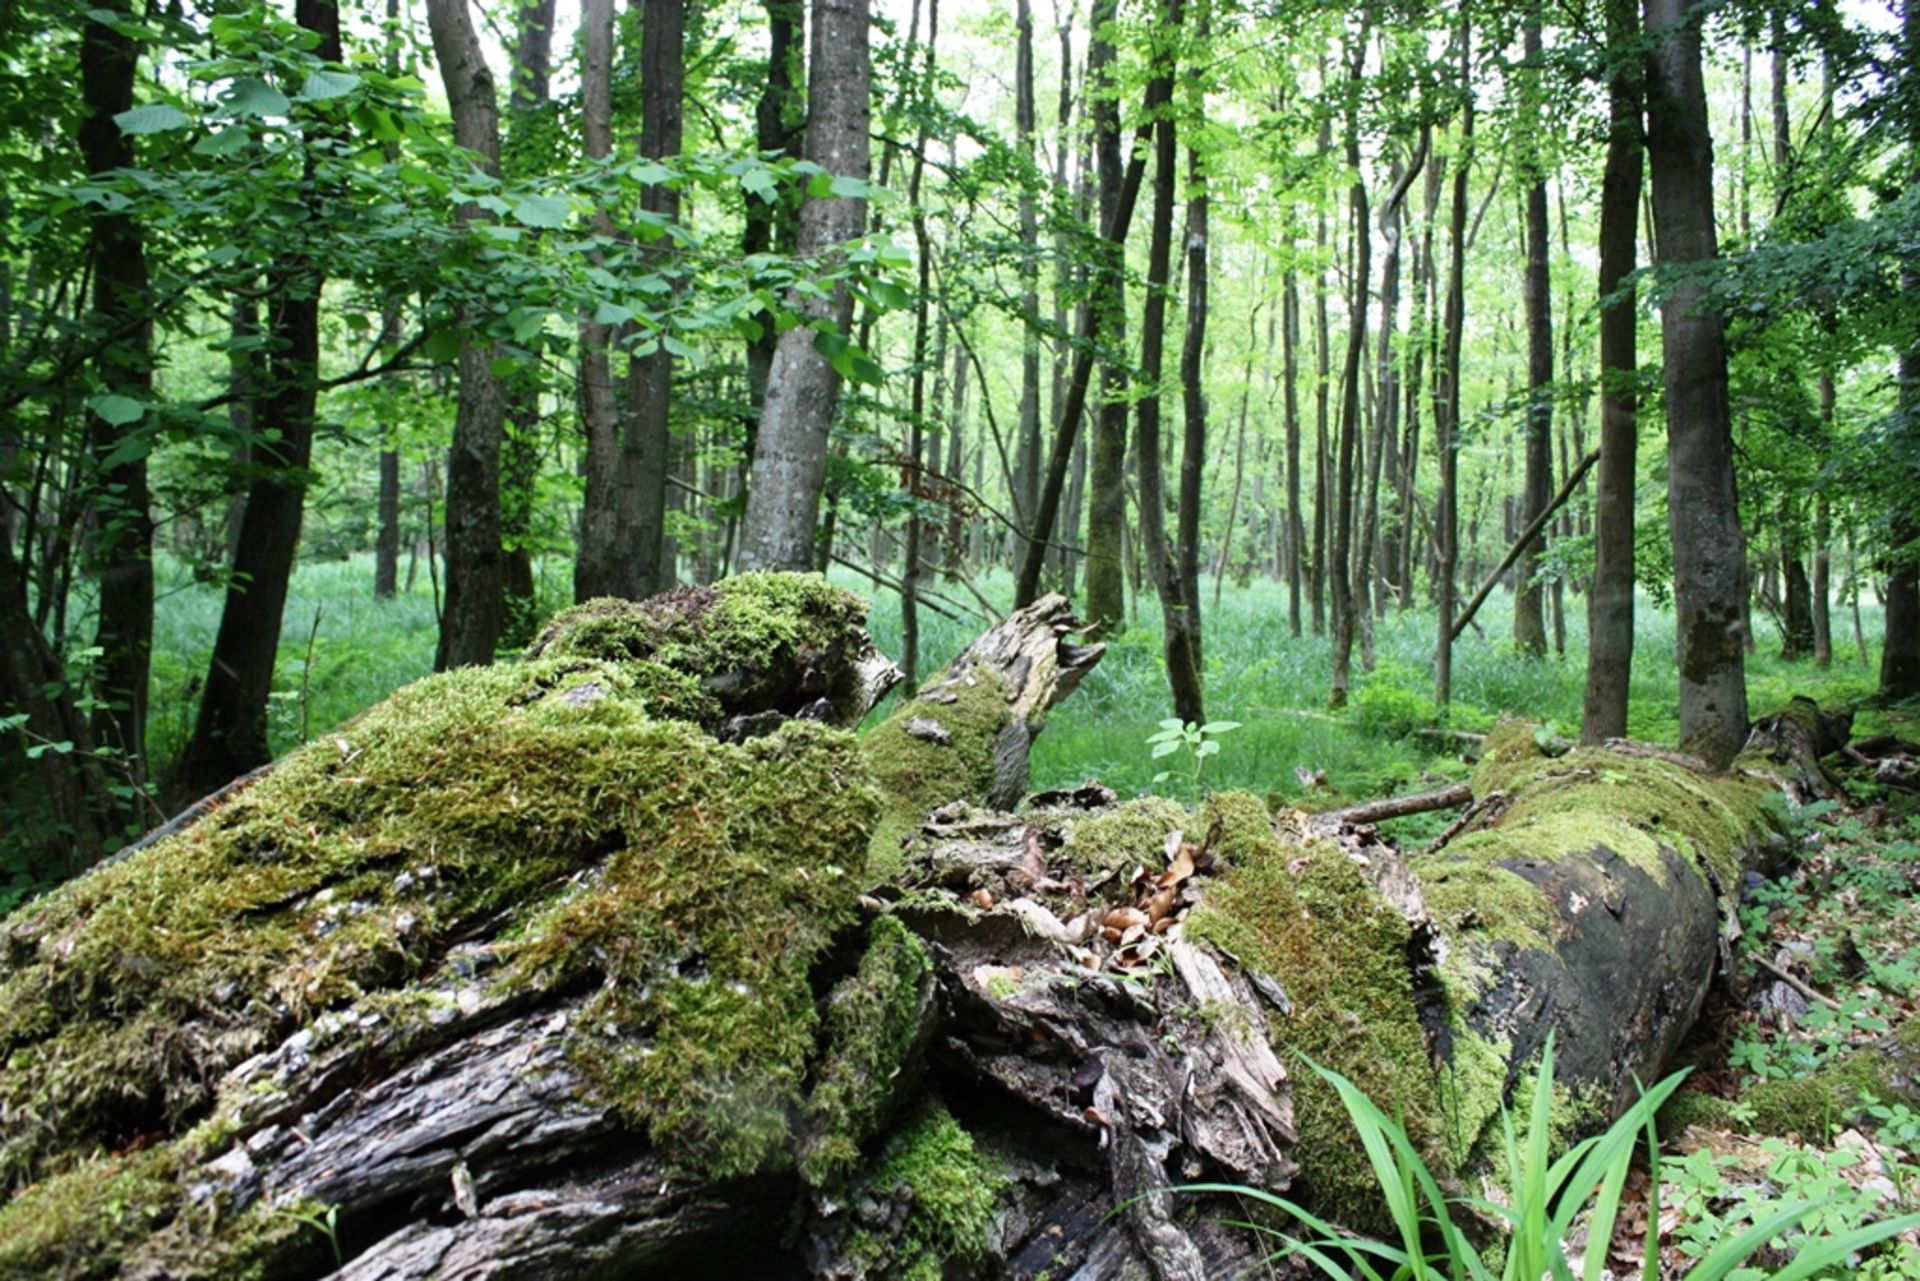 Woods as far as the eye can reach